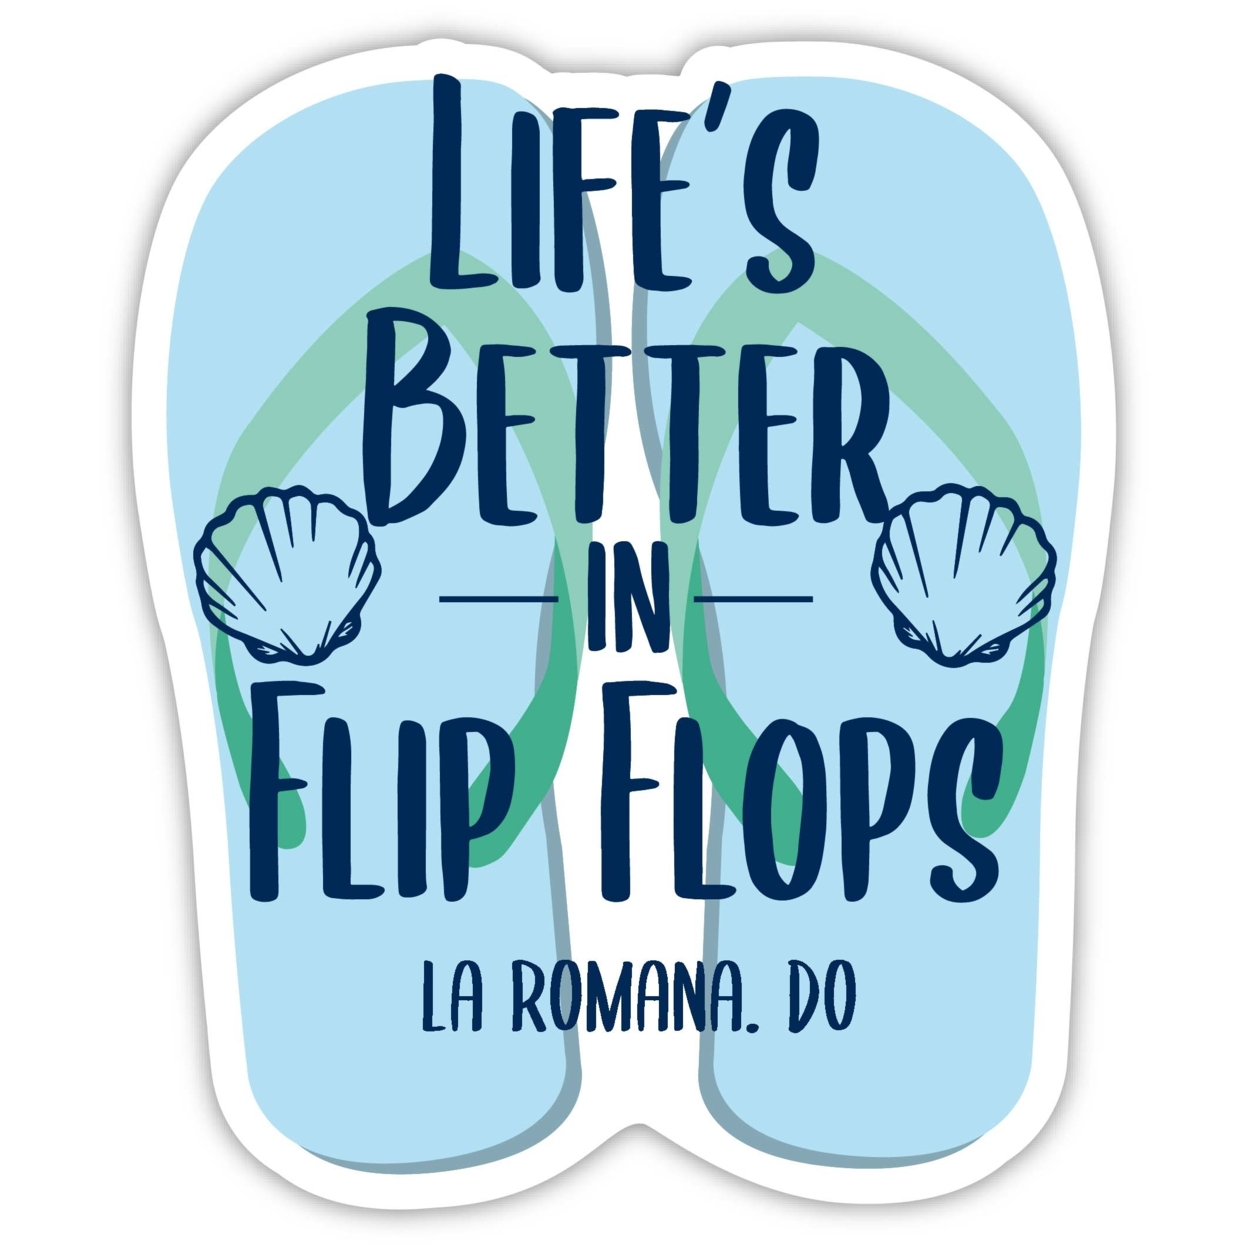 La Romana Dominican Republic Souvenir 4 Inch Vinyl Decal Sticker Flip Flop Design